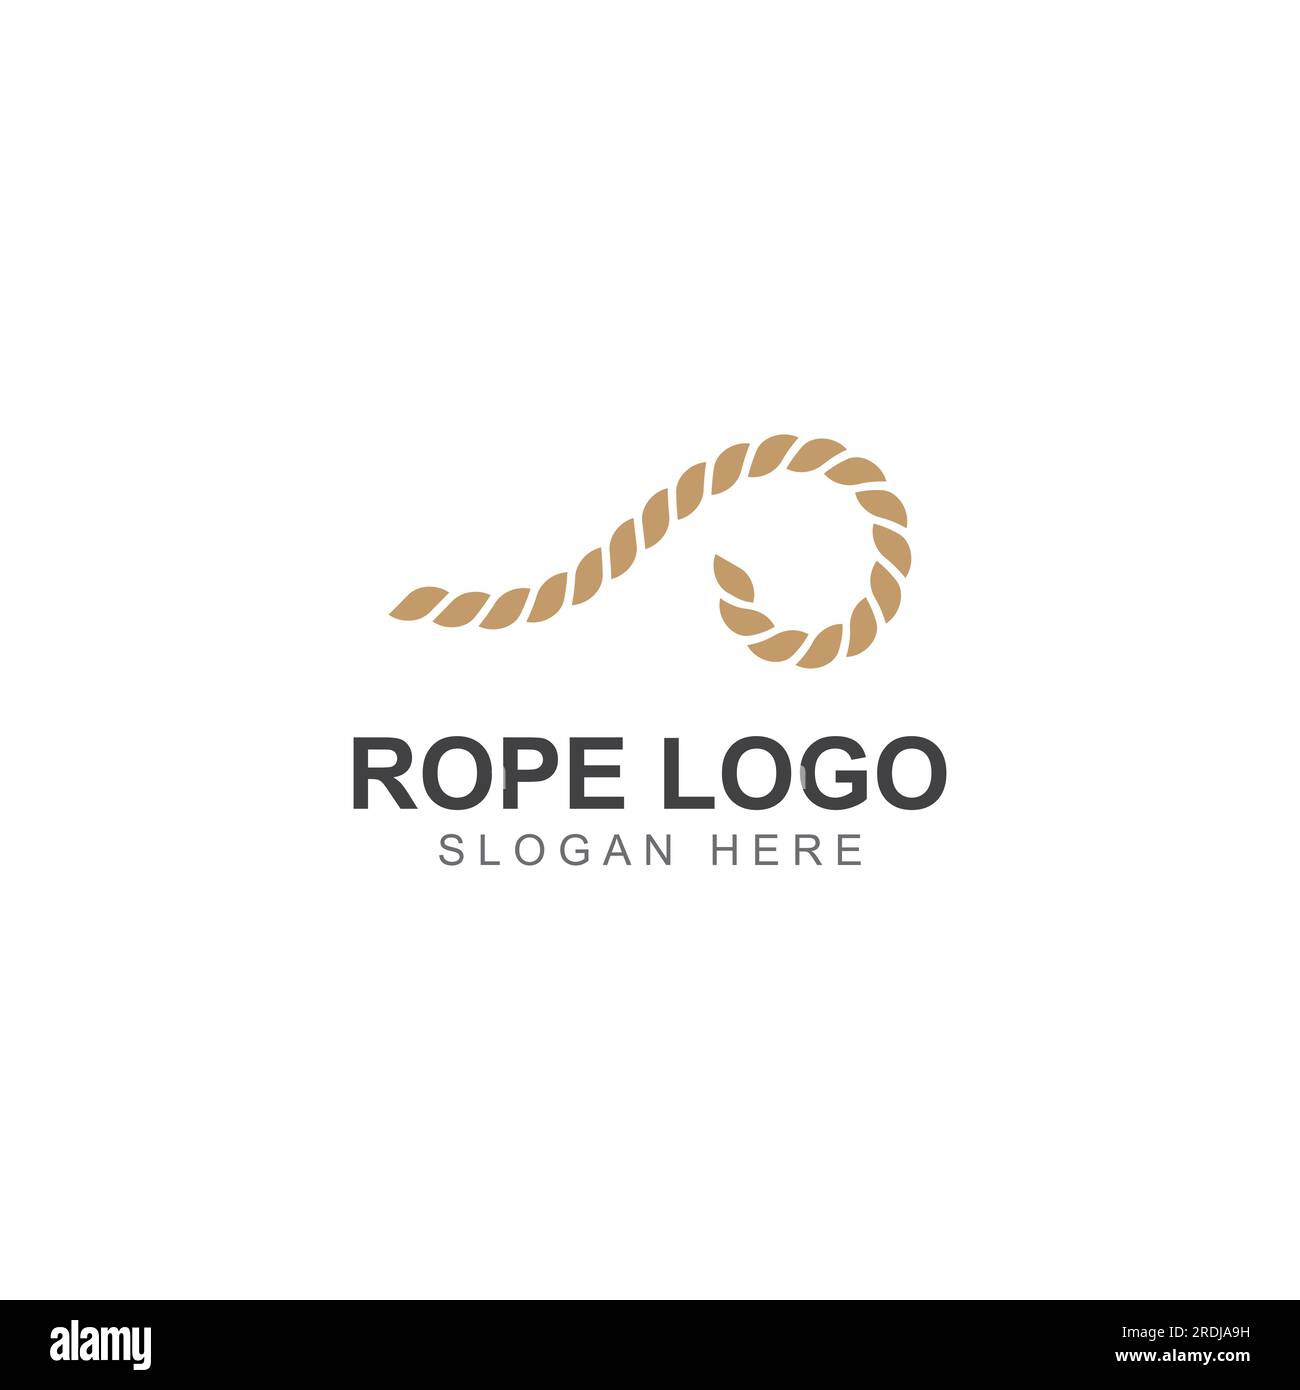 Rope logo using vector design Stock Vector